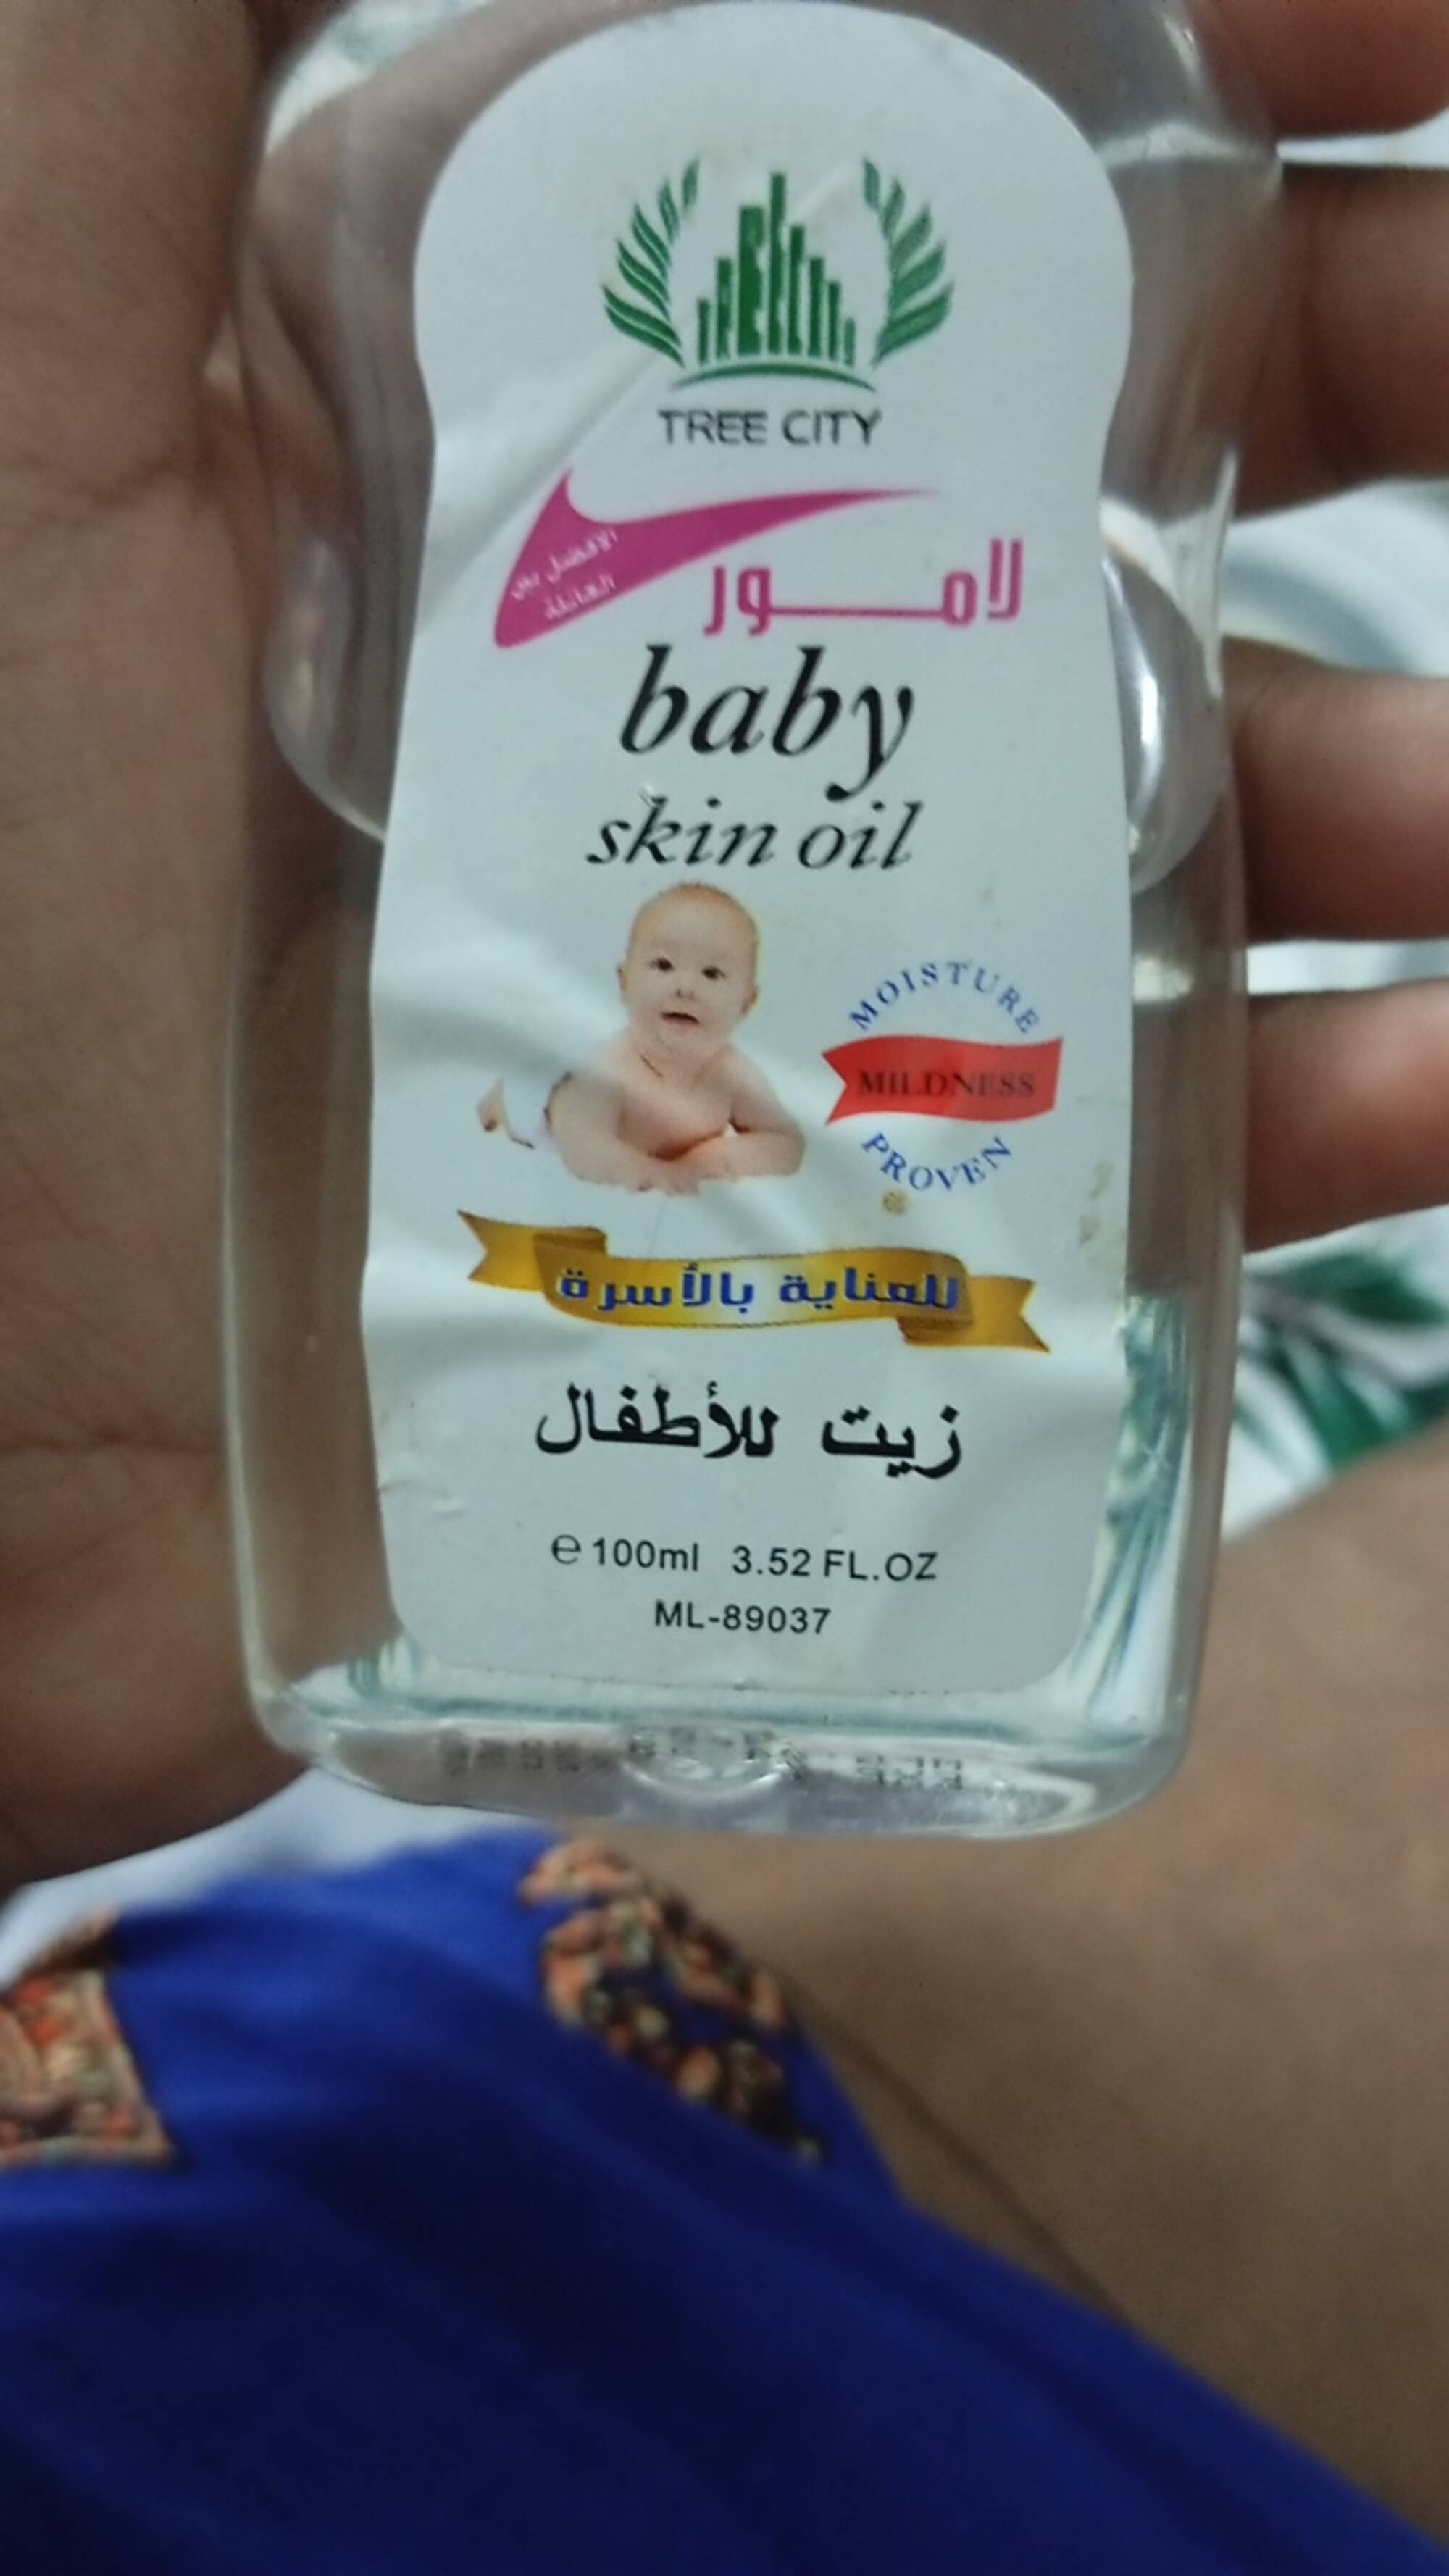 TREE CITY - Baby skin oil